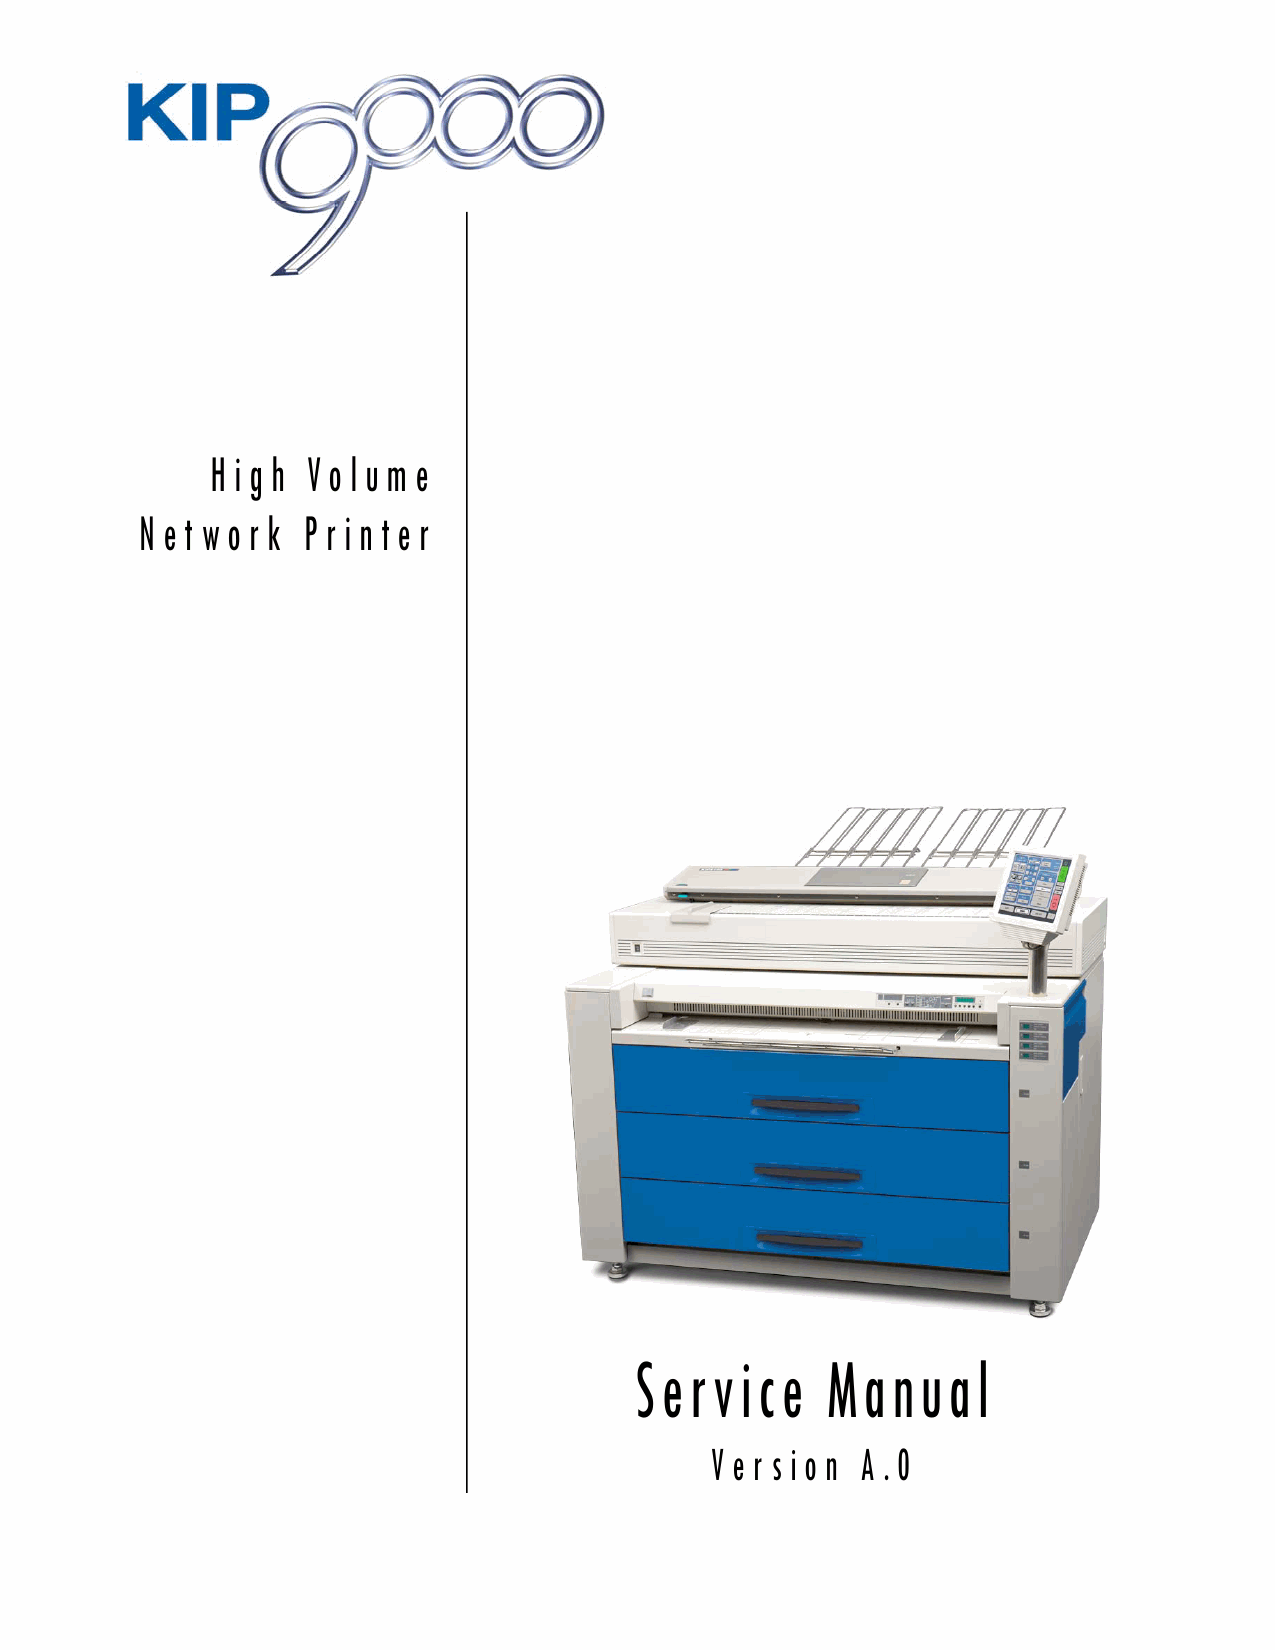 KIP 9000 Service Manual-1